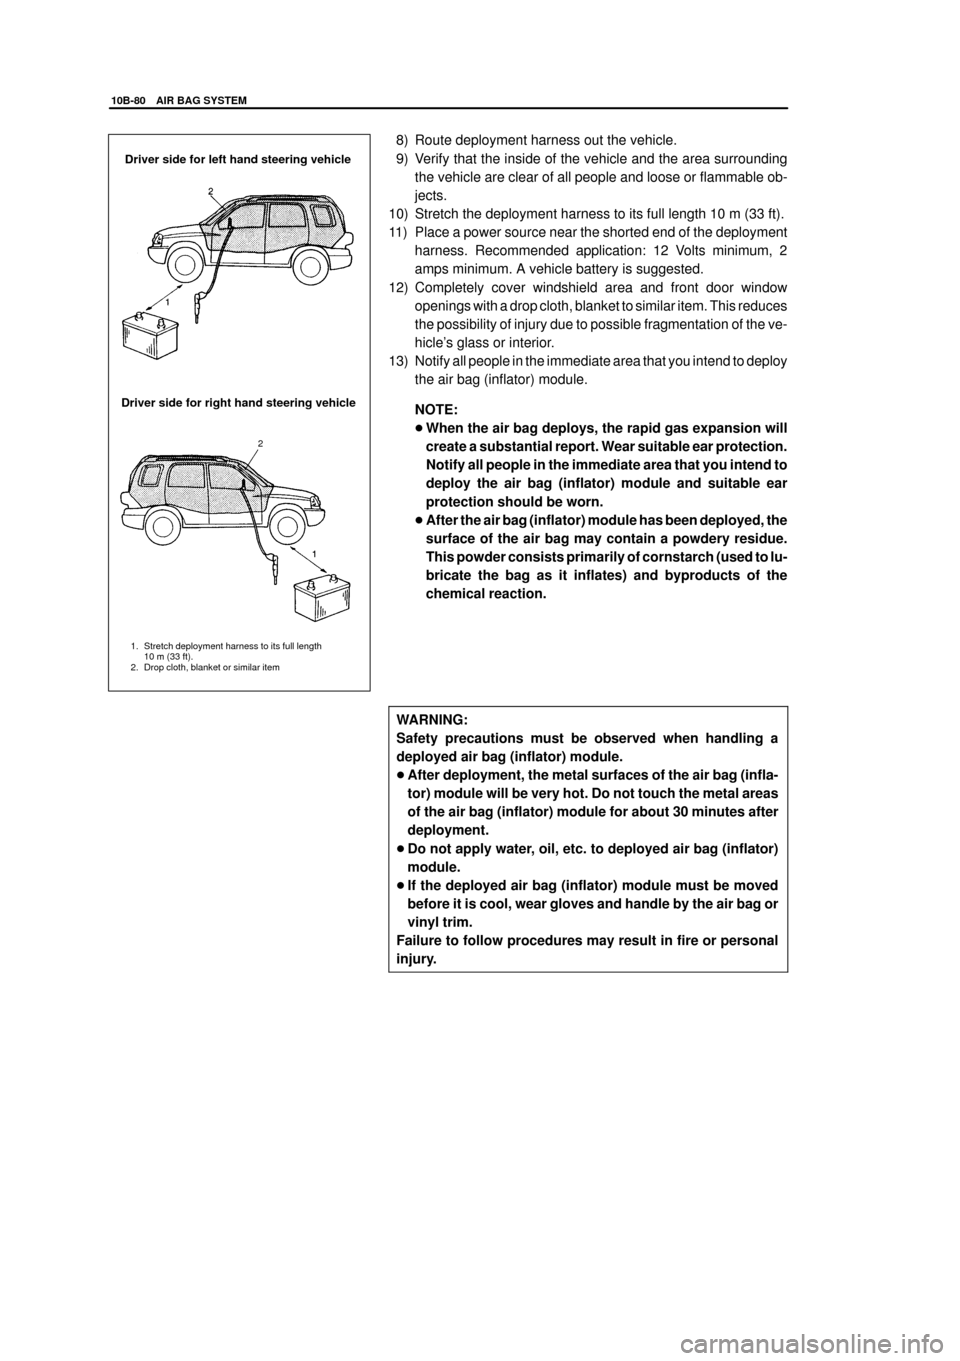 SUZUKI GRAND VITARA 2002 2.G Service Workshop Manual YH4
GRAND
VITARA
Driver side for left hand steering vehicle
Driver side for right hand steering vehicle
1. Stretch deployment harness to its full length 
10 m (33 ft).
2. Drop cloth, blanket or simila